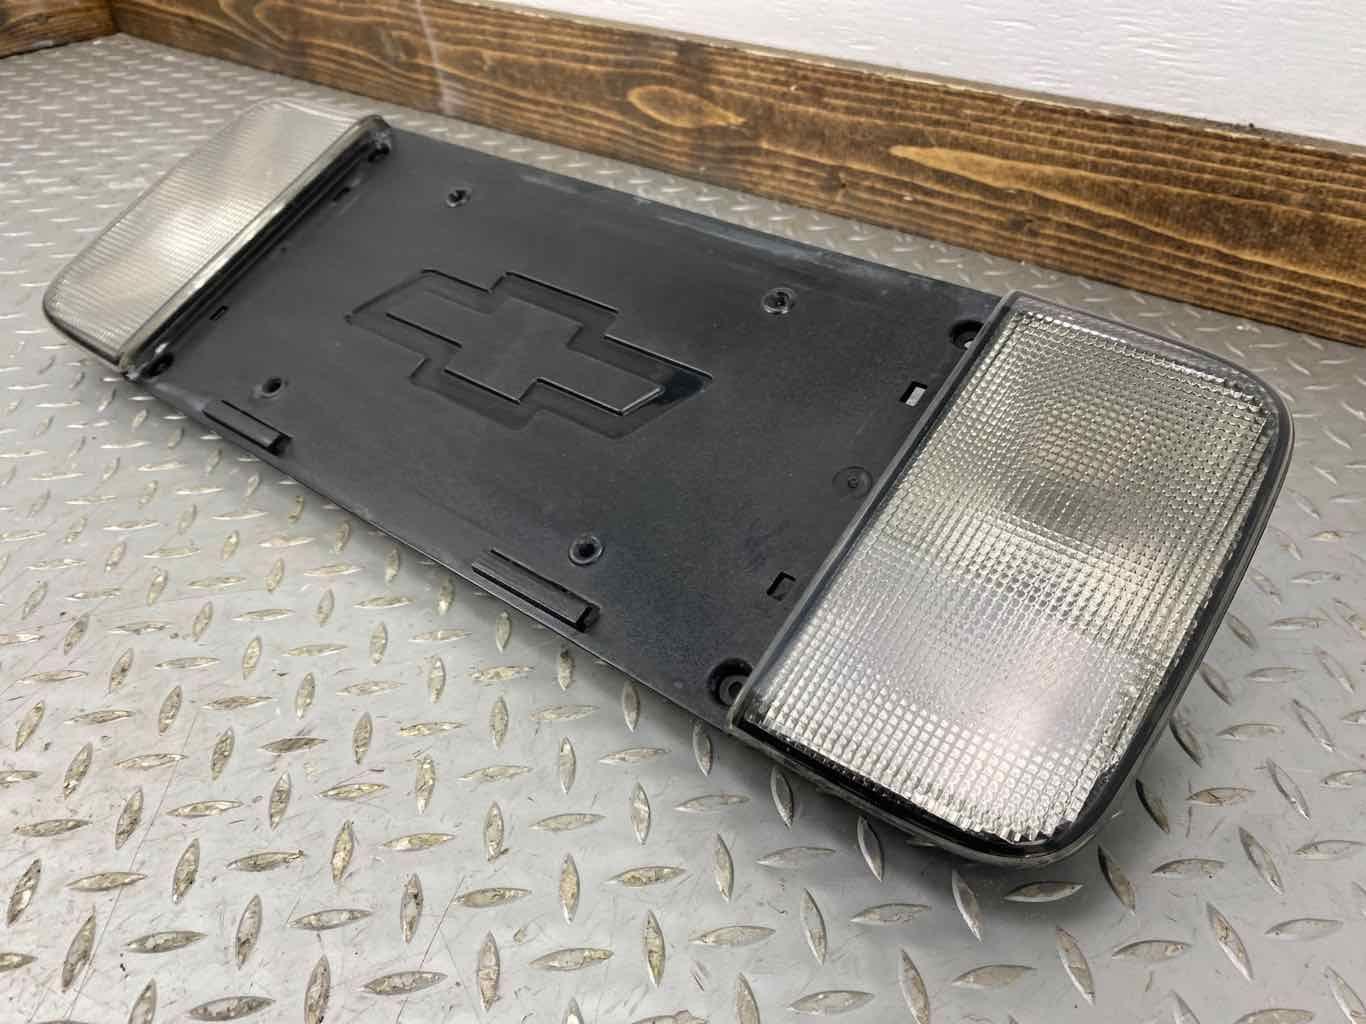 97-04 Chevy C5 Corvette Rear Tail Finish Panel (Textured Black) W/Reverse Lights